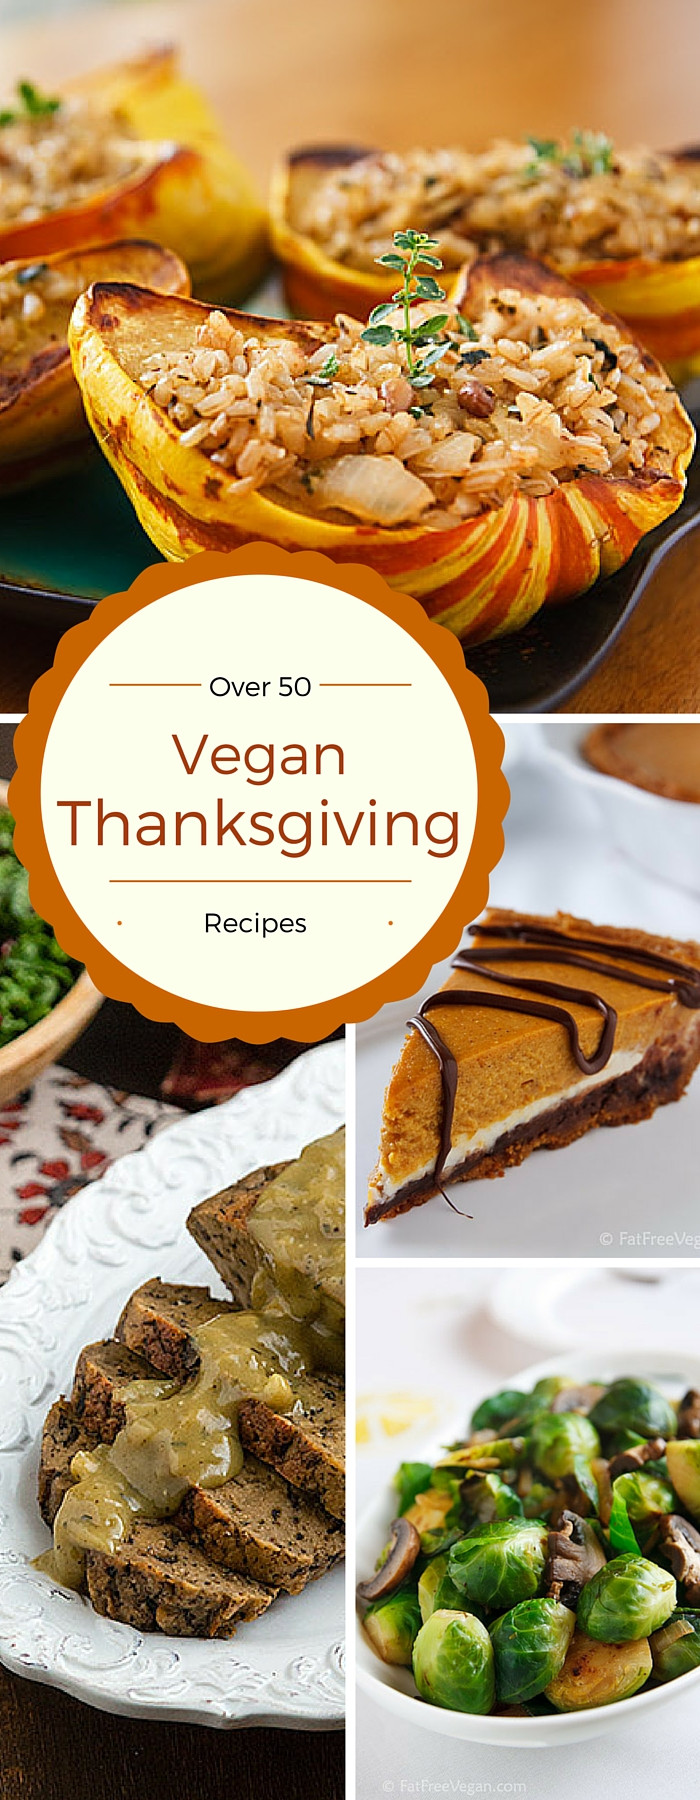 Thanksgiving Recipes Vegan
 Thanksgiving Recipes Archives